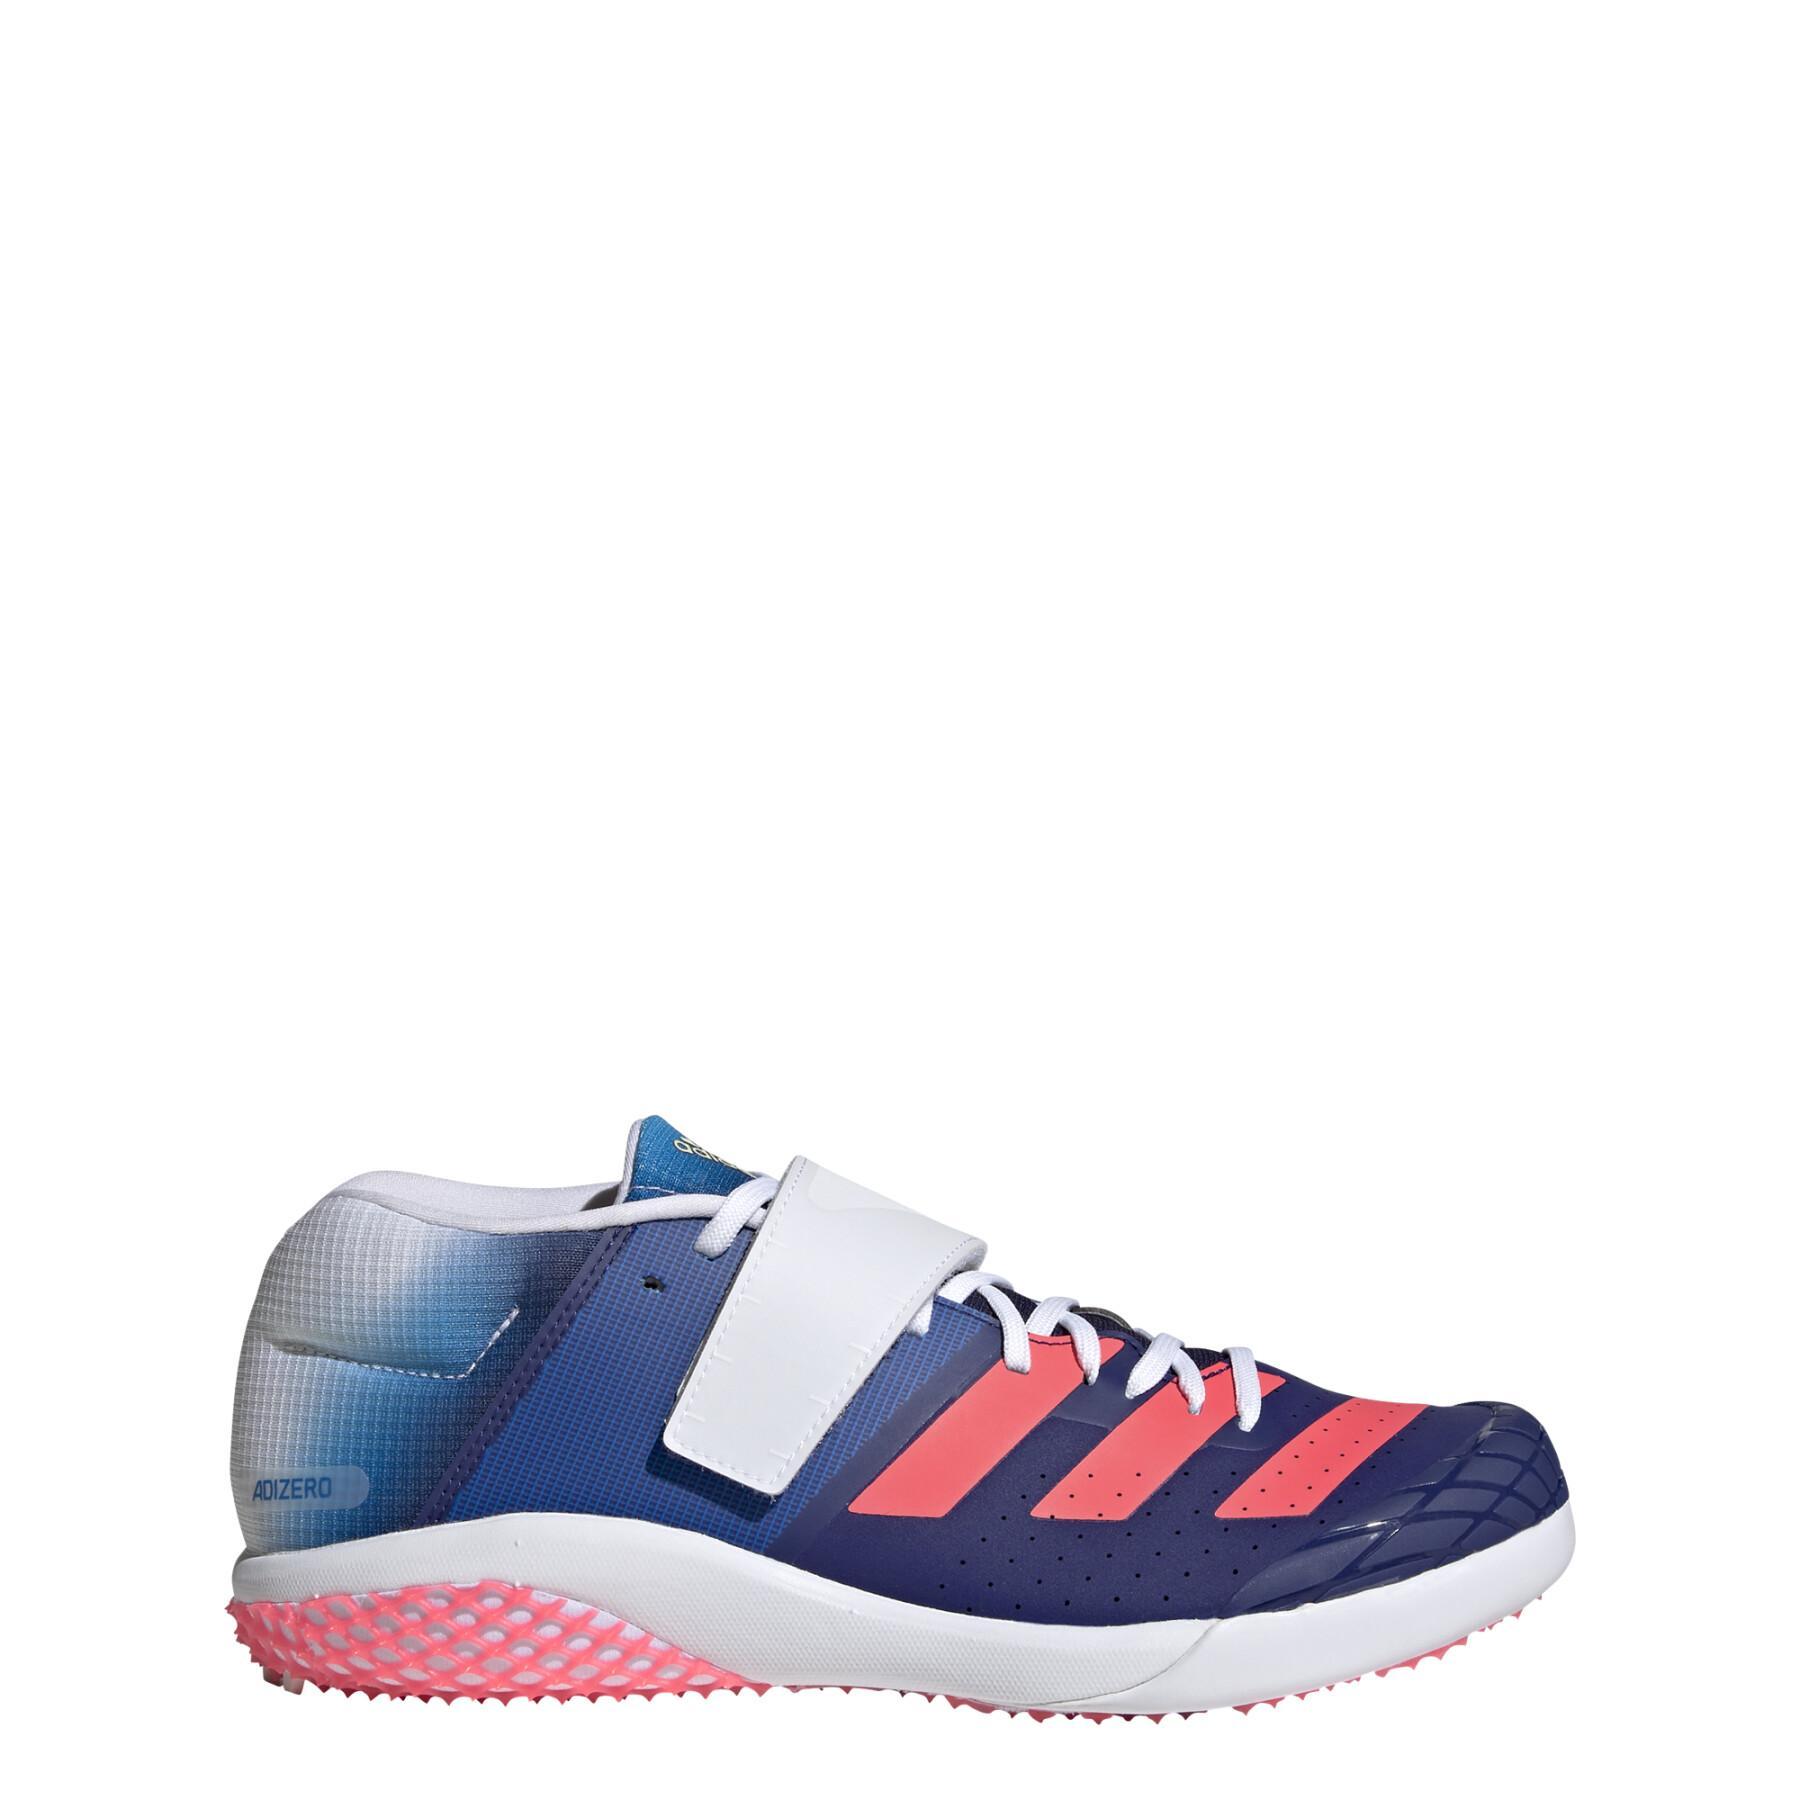 Chaussures de lancer de Javelot adidas Adizero